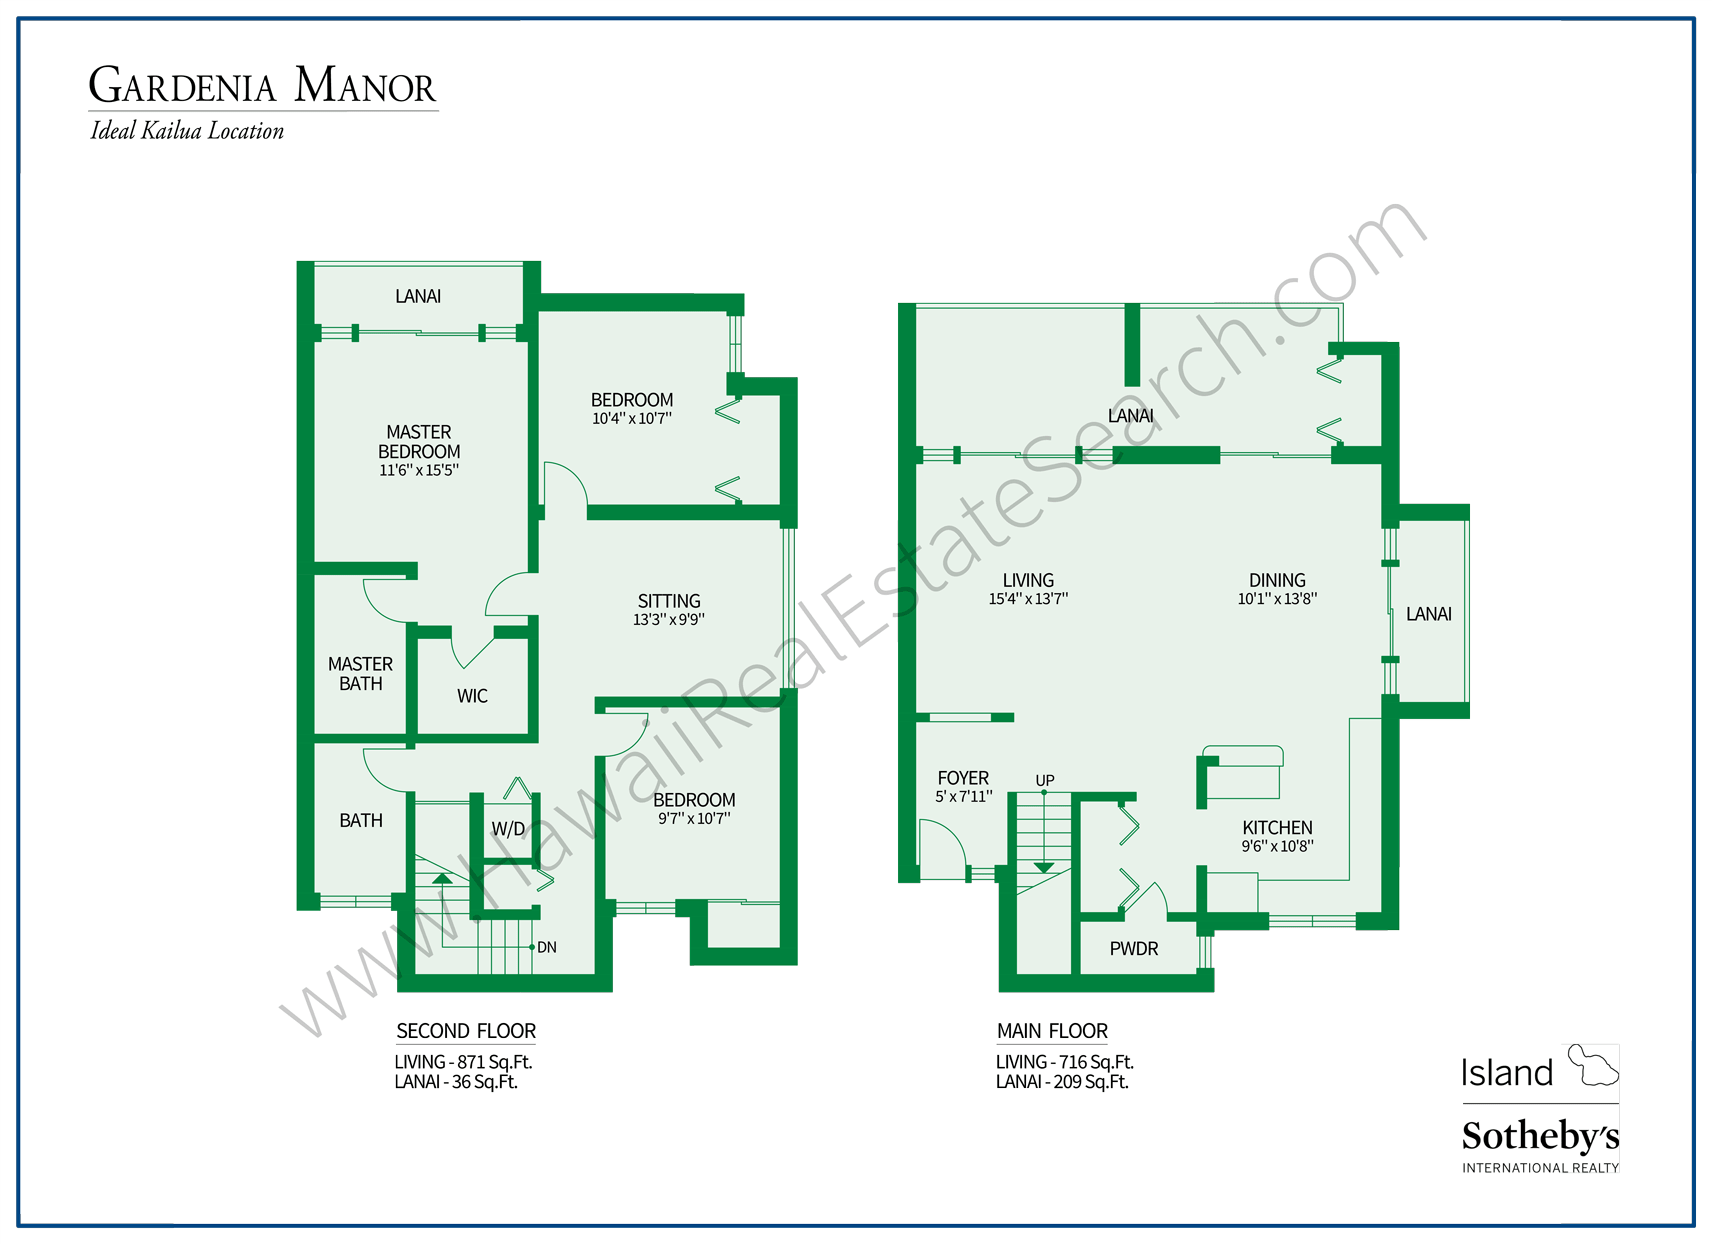 Gardenia Manor Floor Plan